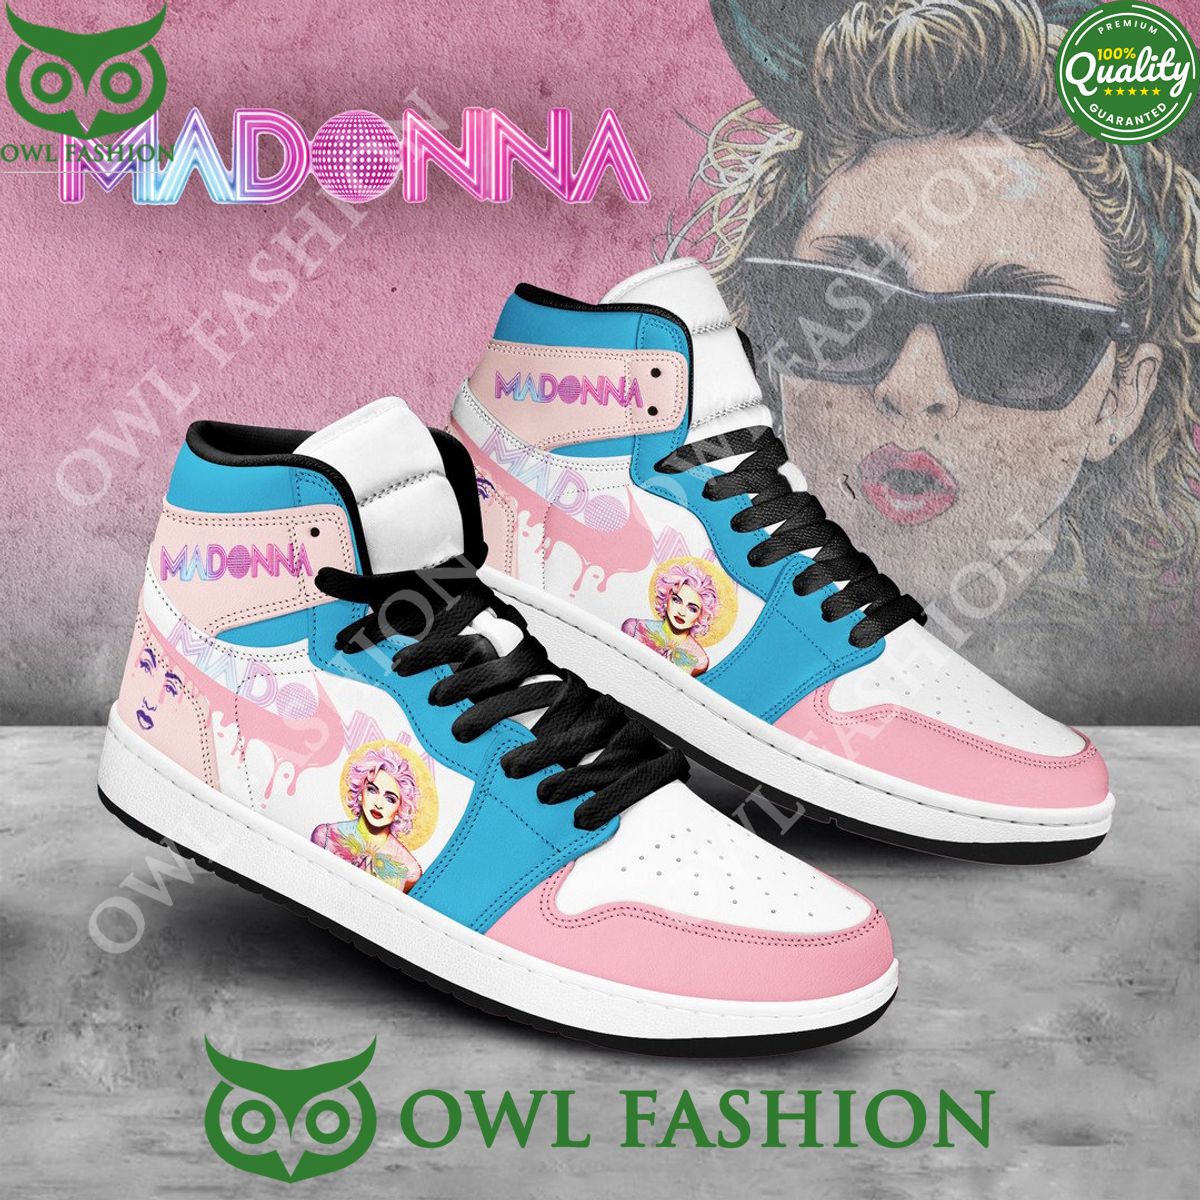 Madonna Queen of Pop singer Air Jordan Sneaker